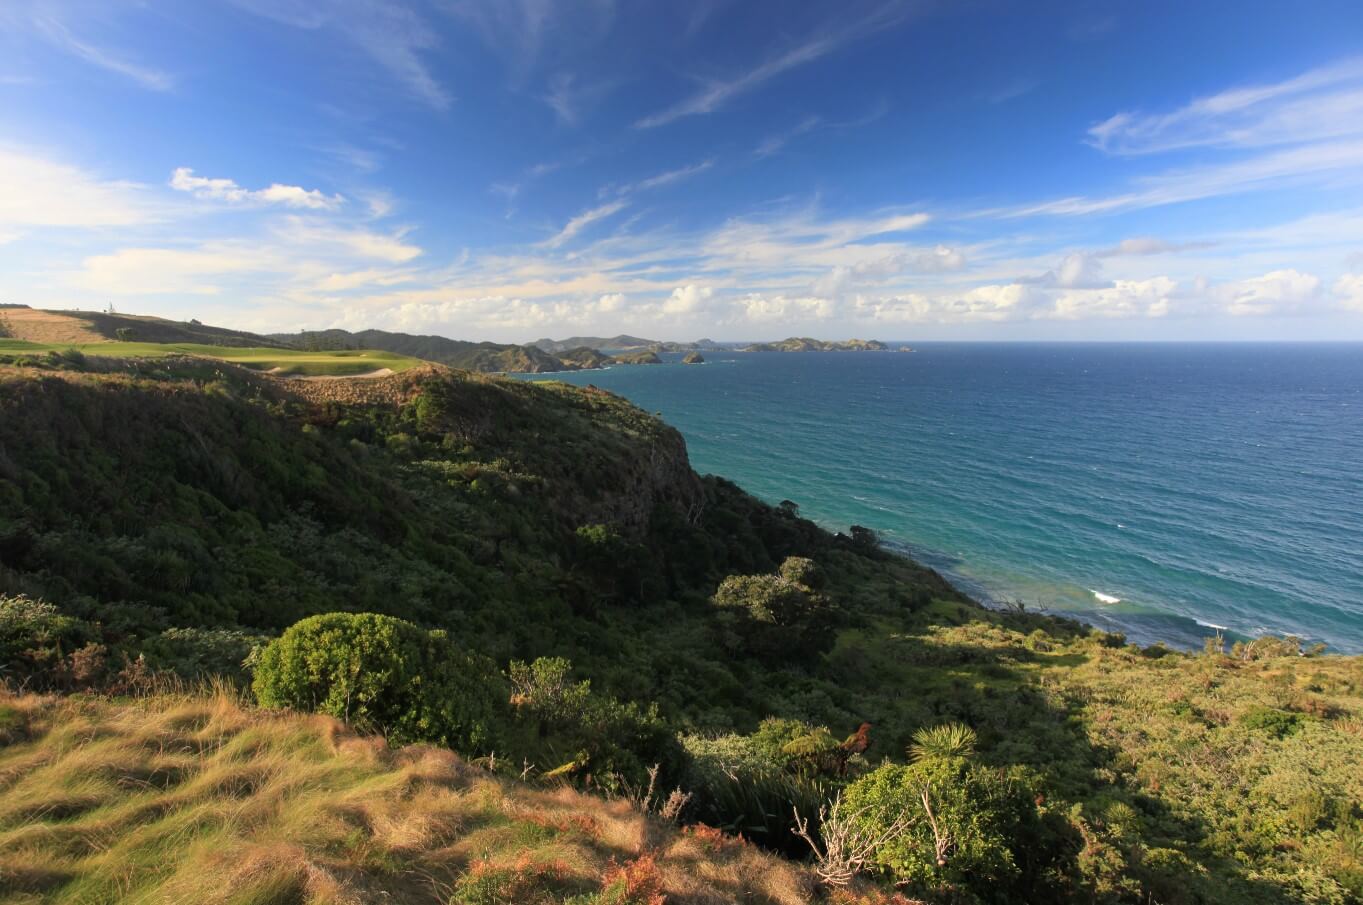 Image overlooking Matauri Bay and Kauri Cliffs Golf Resort